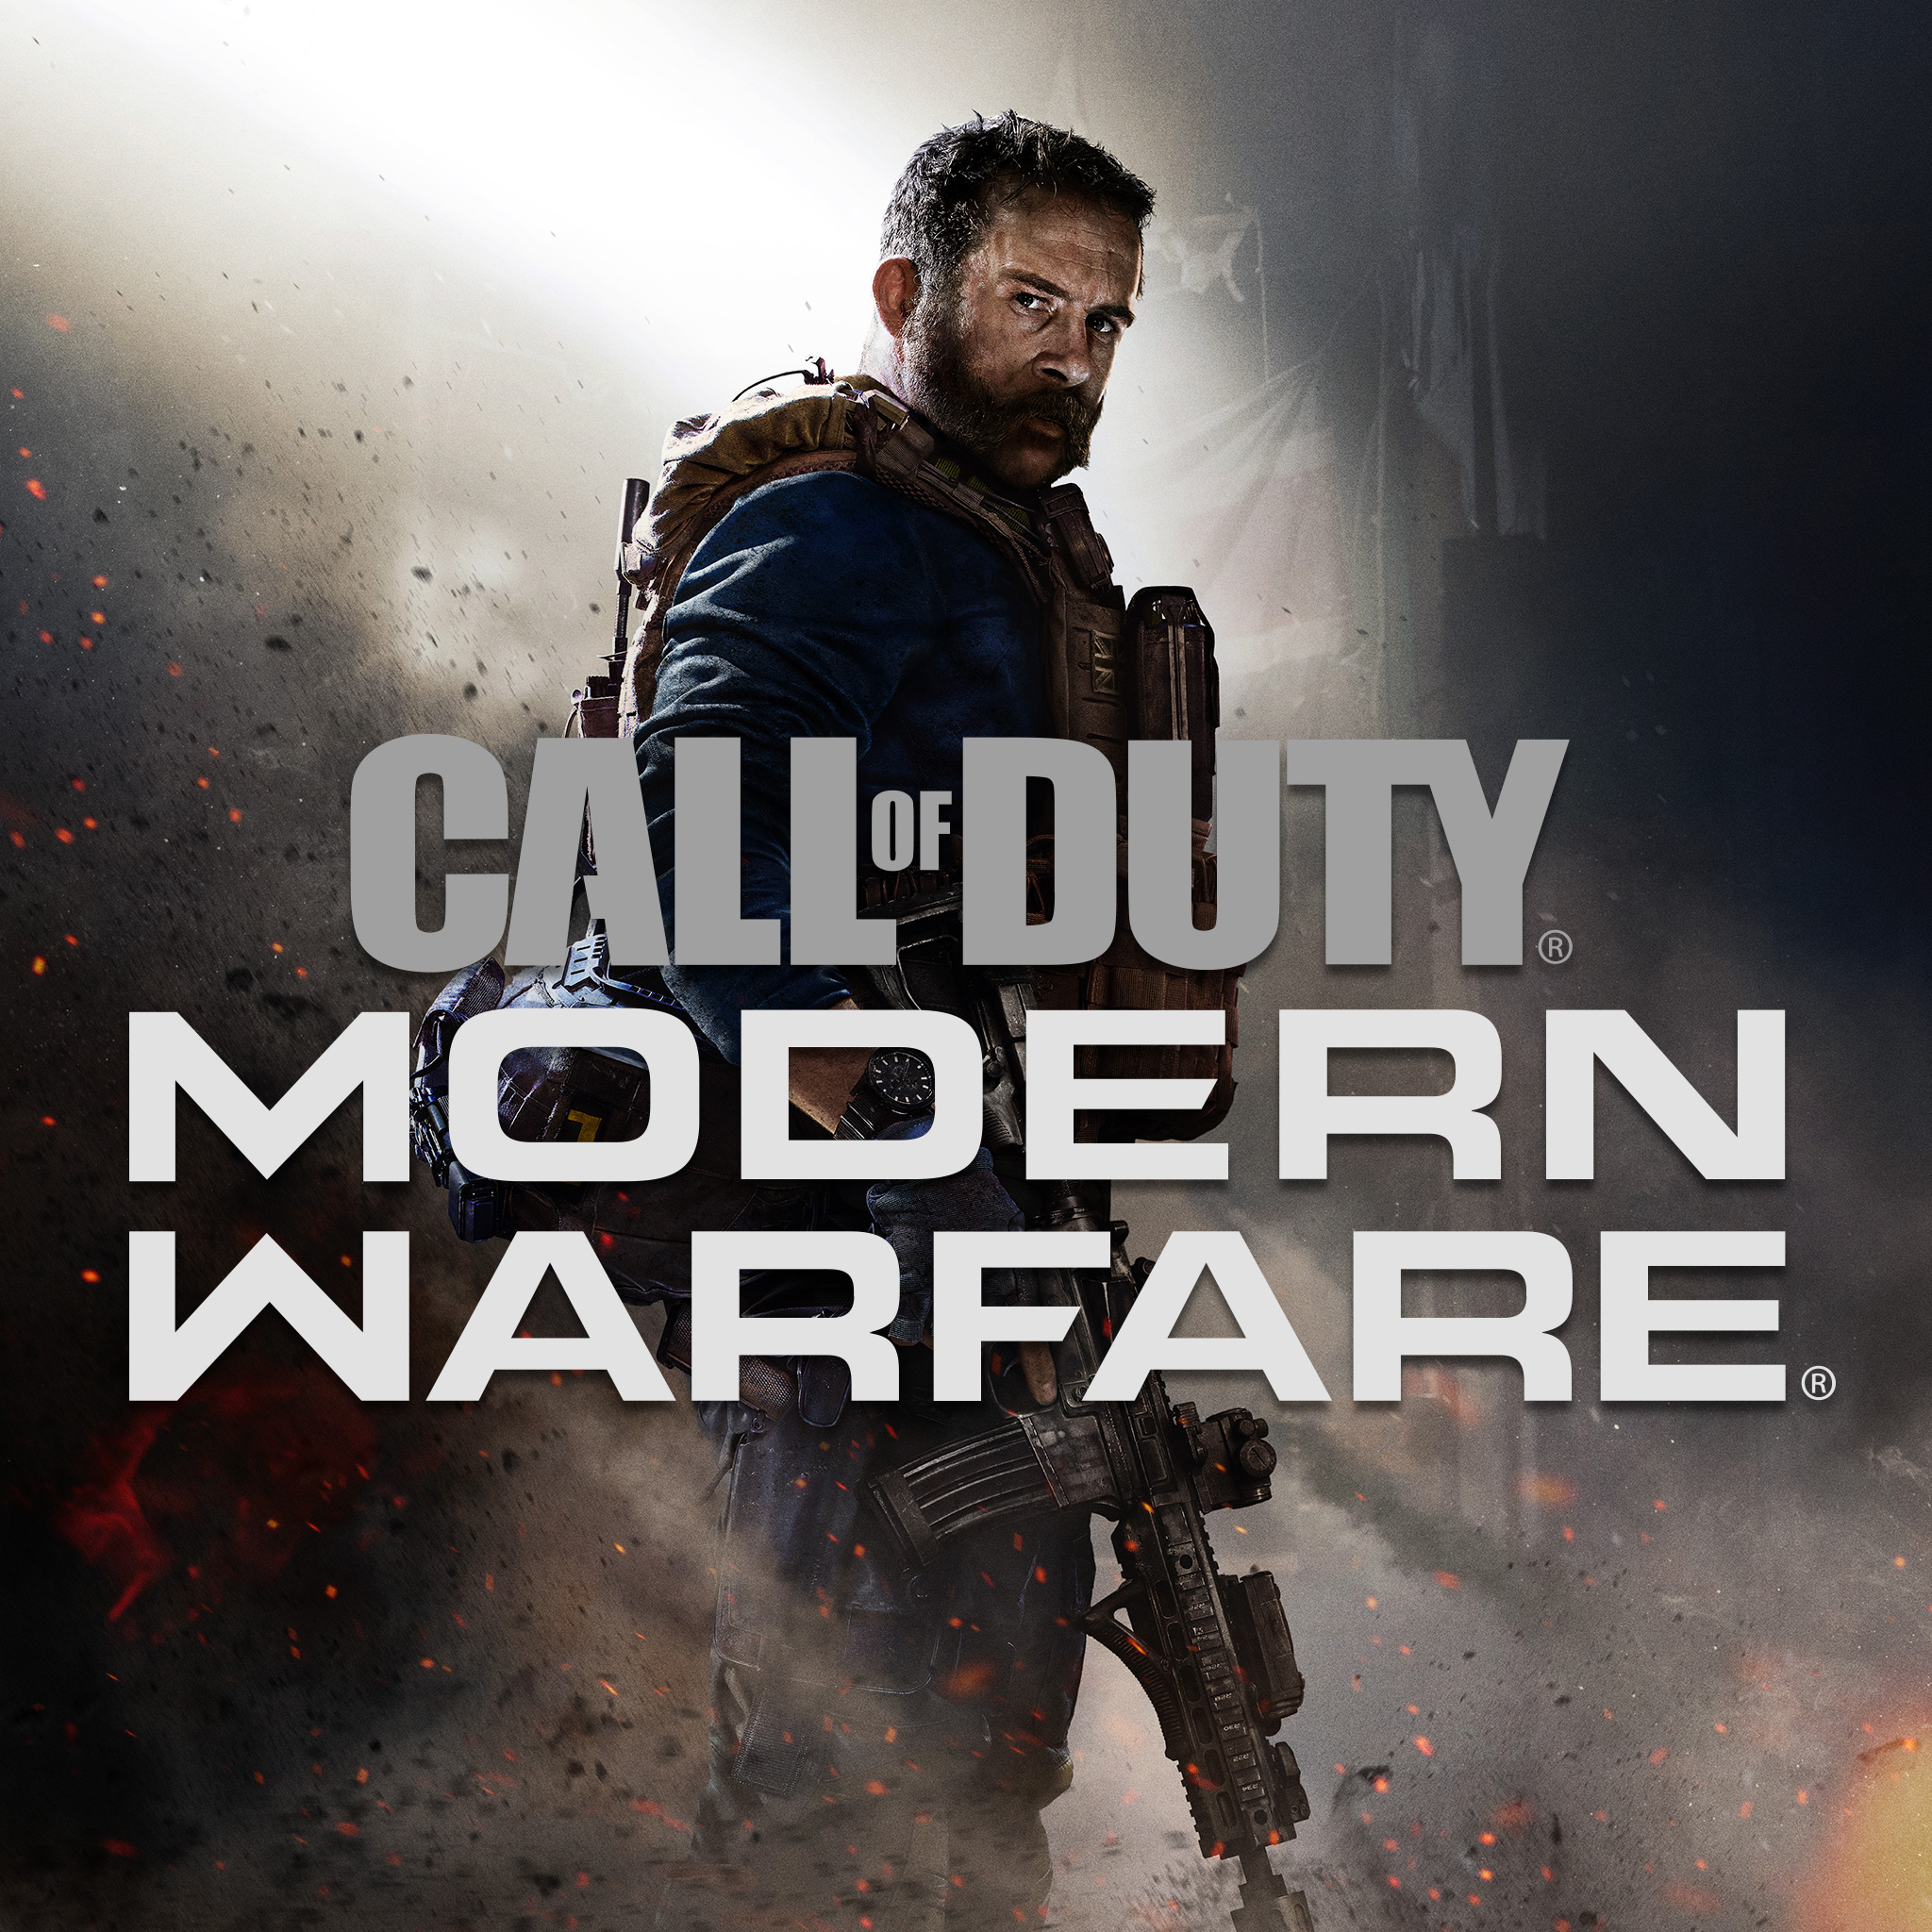 Call of Duty® Modern Warfare® PS4 Price & Sale History Get 50